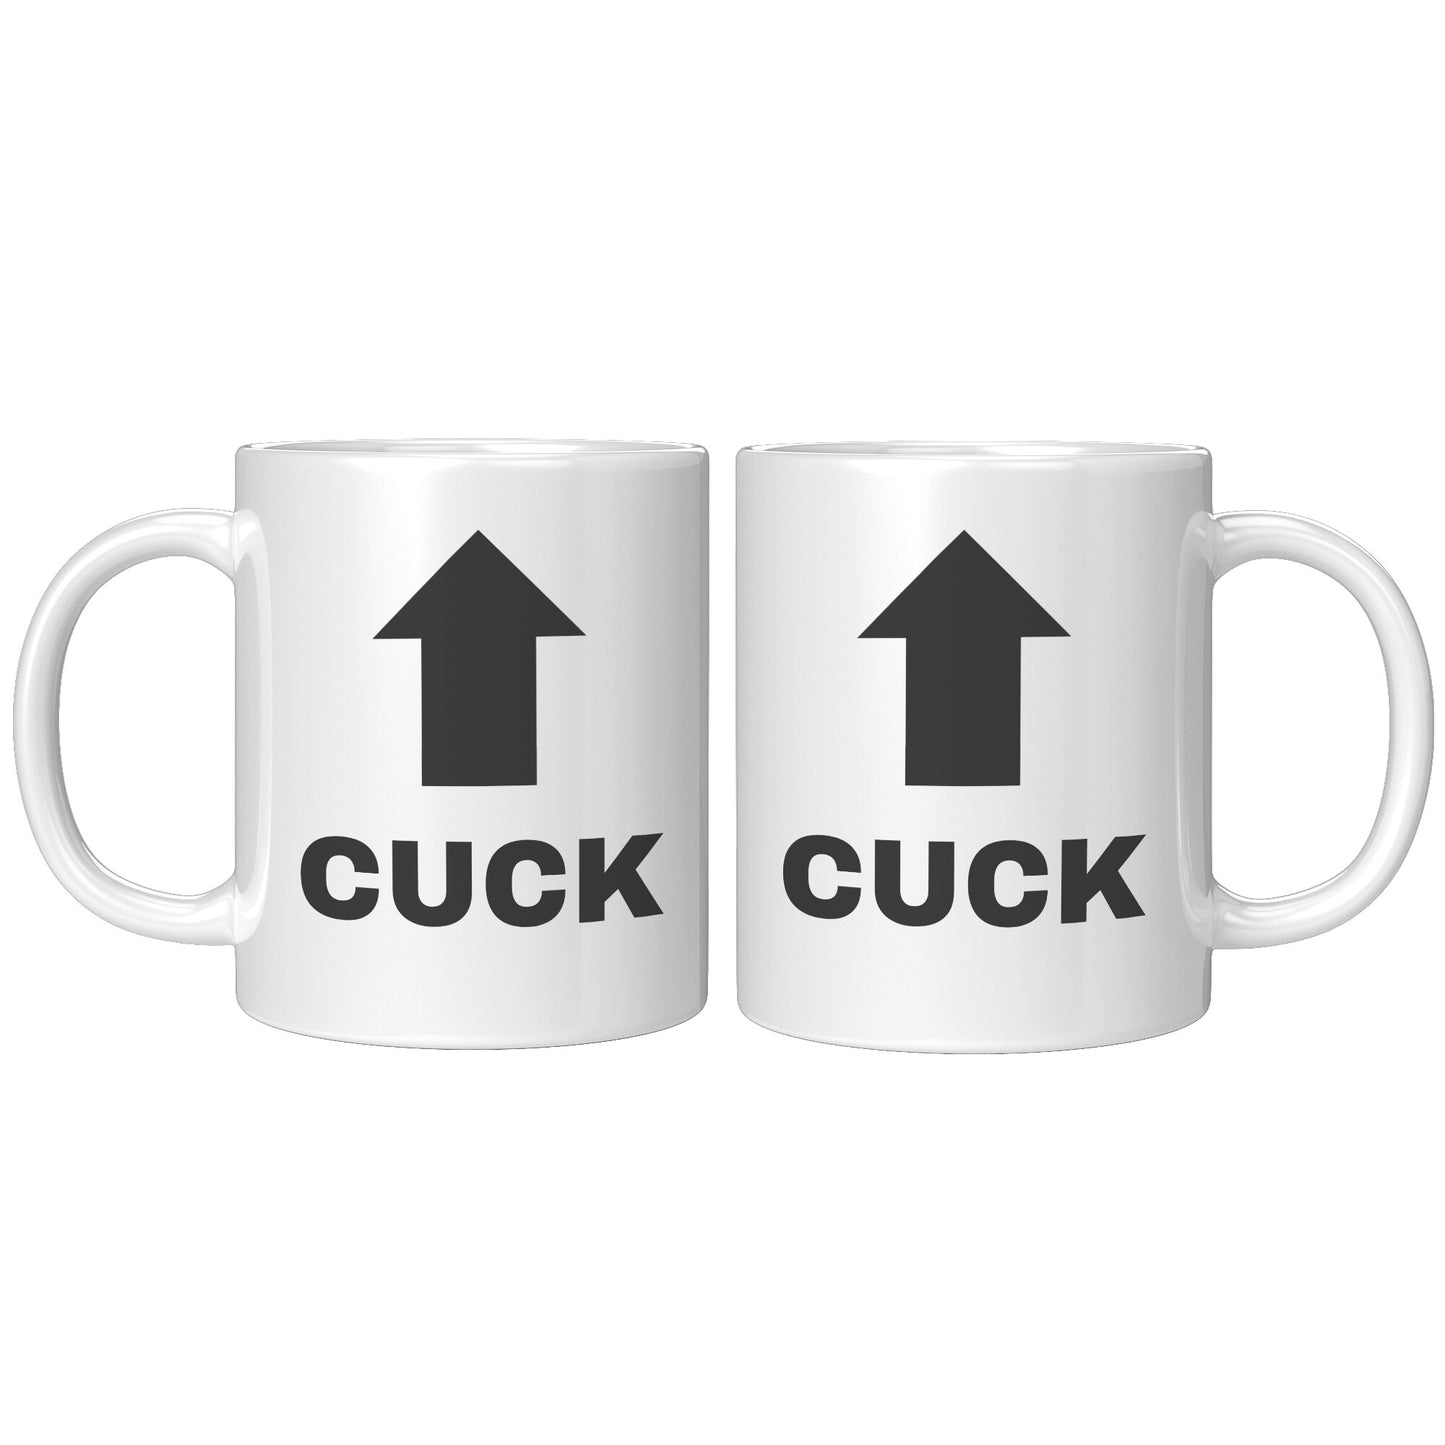 Cuck mug